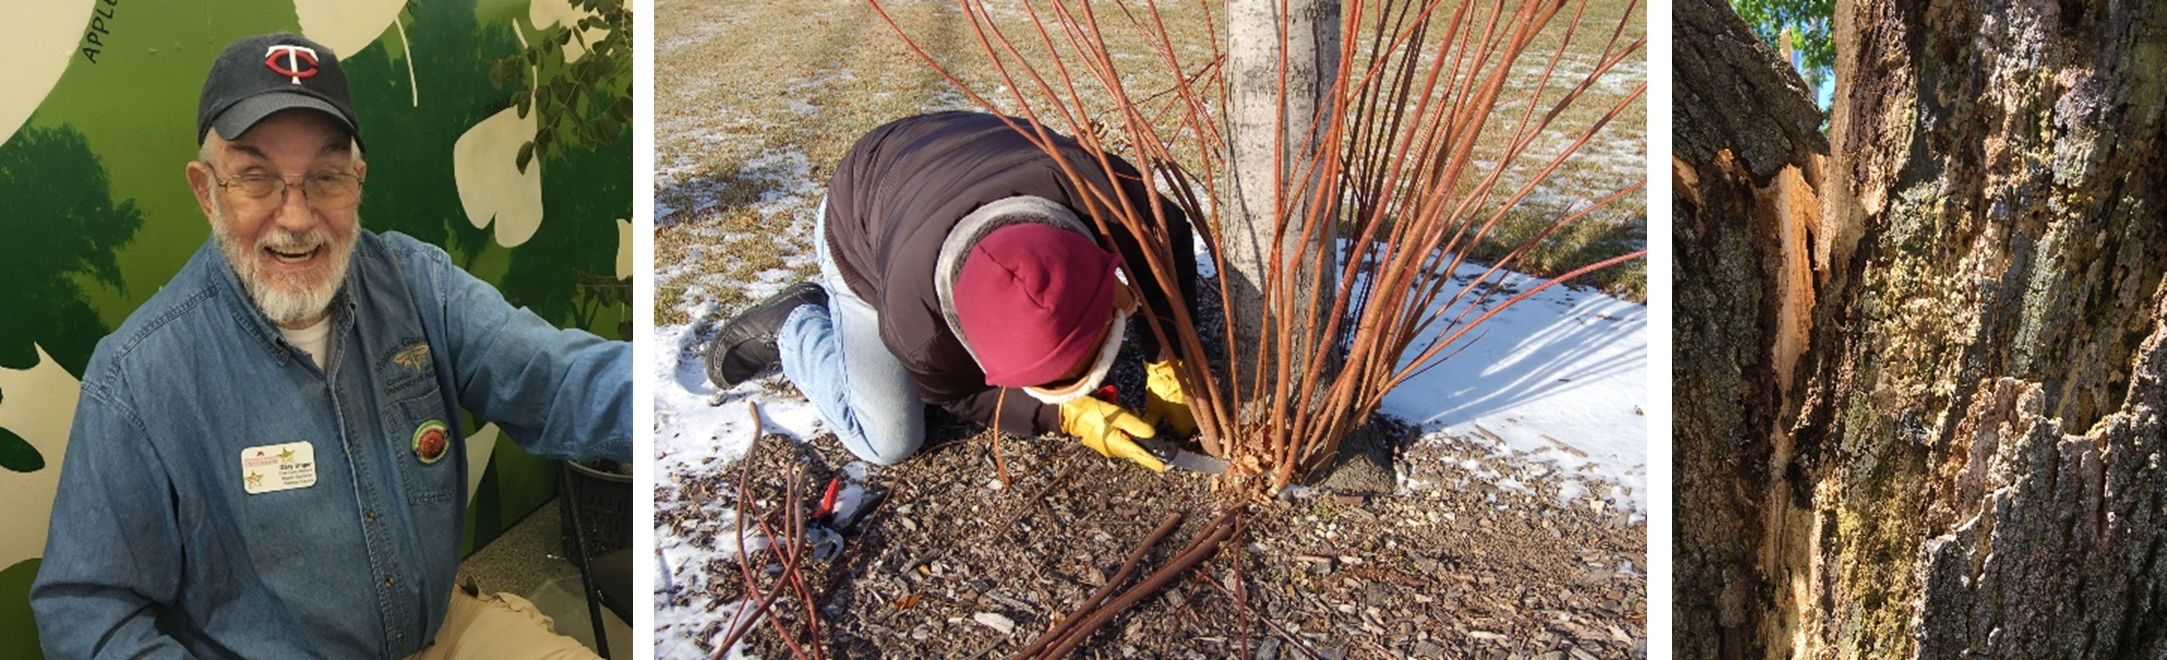 Become a Tree Care Advisor | Minnesota Tree Care Advocate